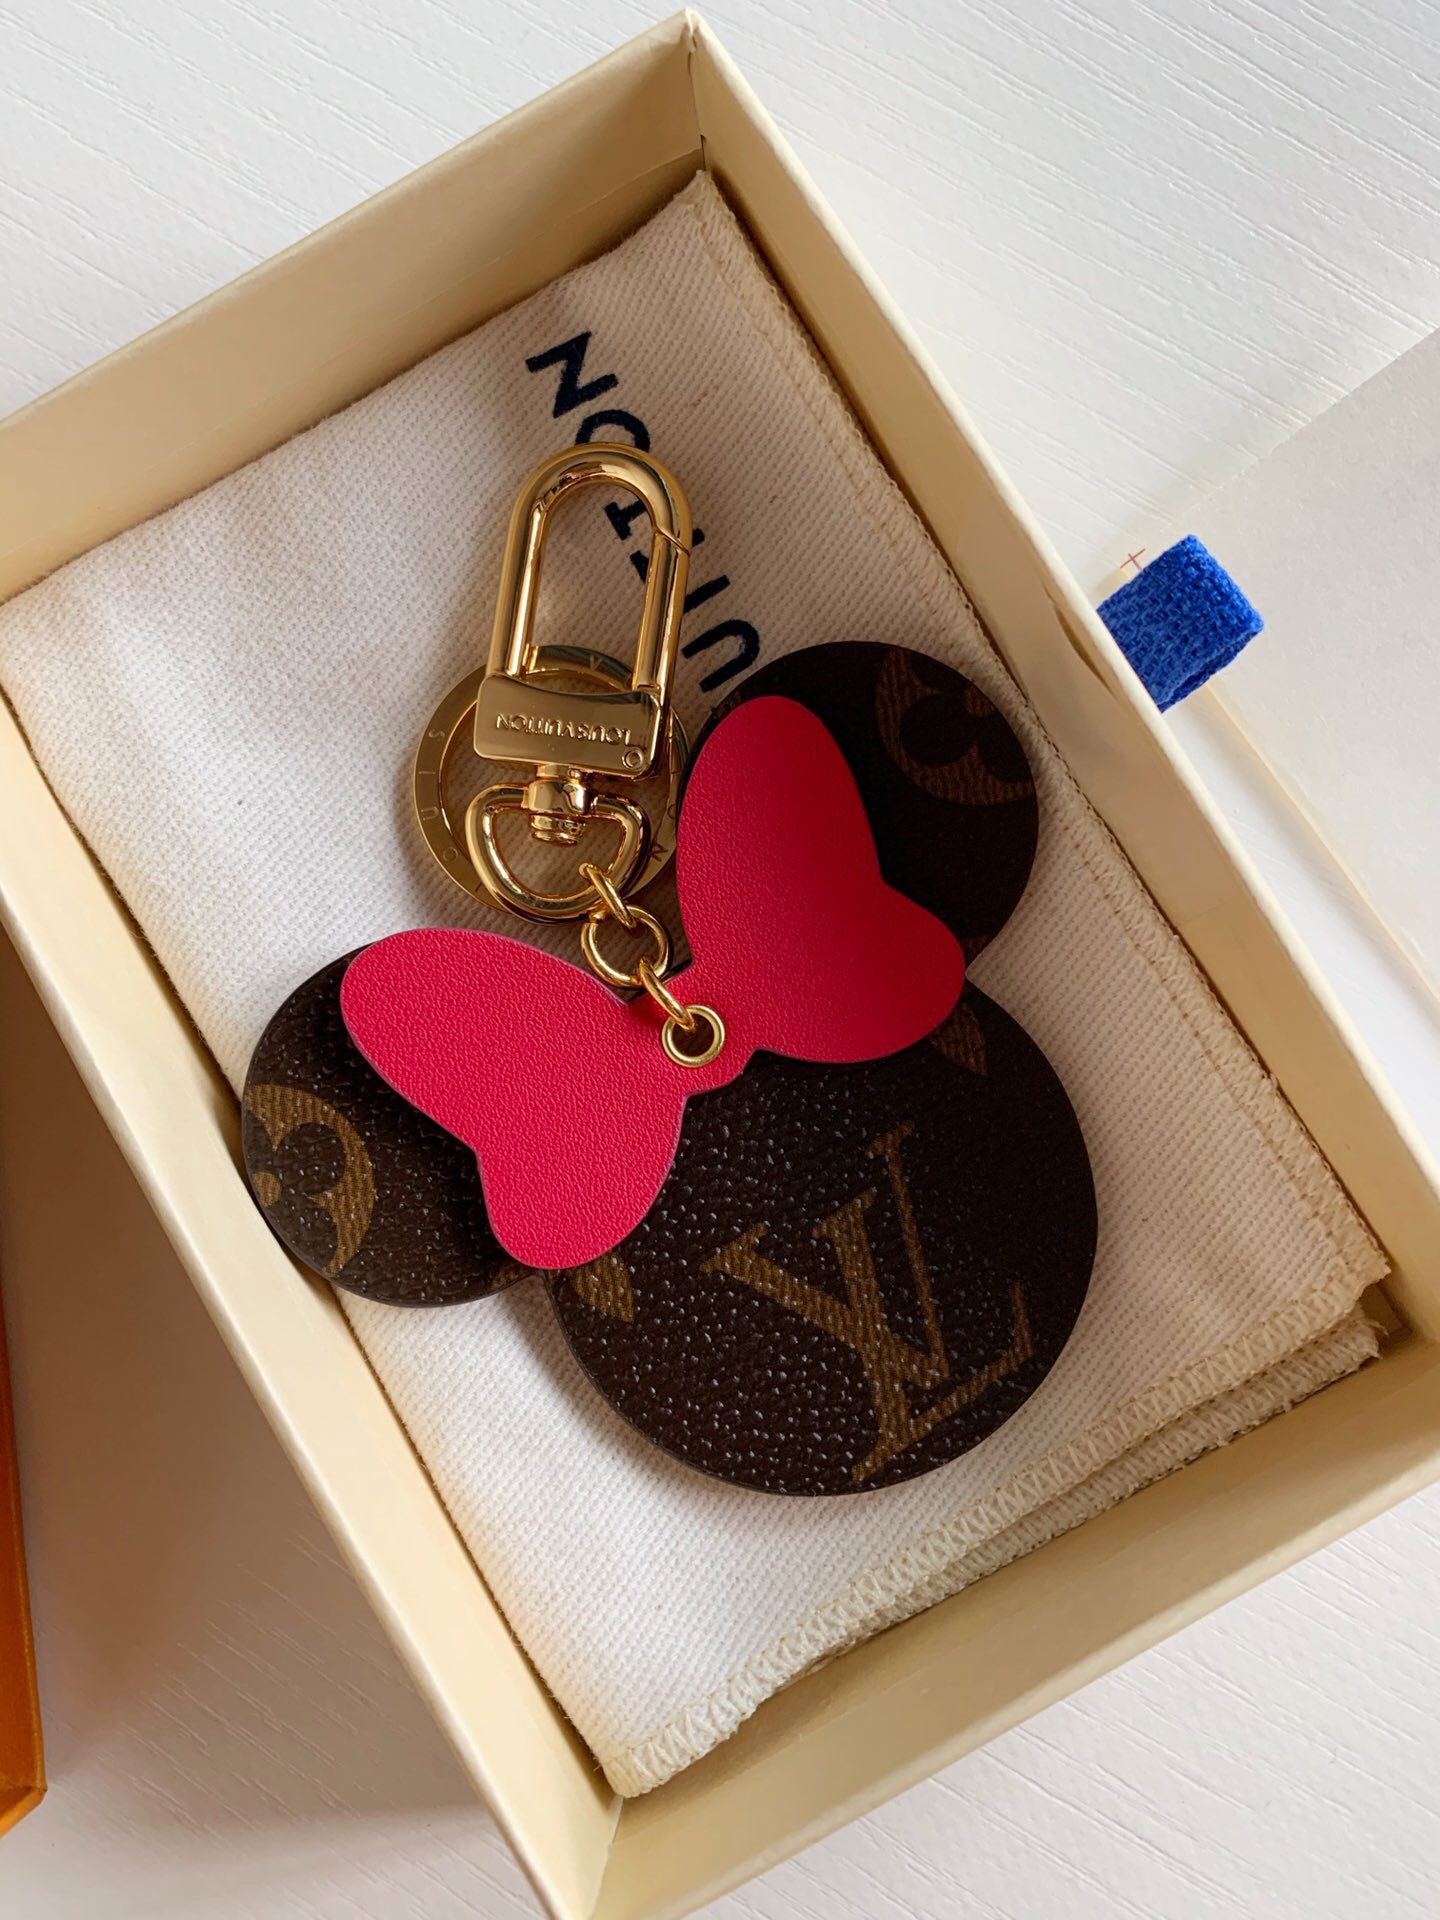 LV 迪拜Vip限量纪念款 Mickey mouse 包挂饰/钥匙扣